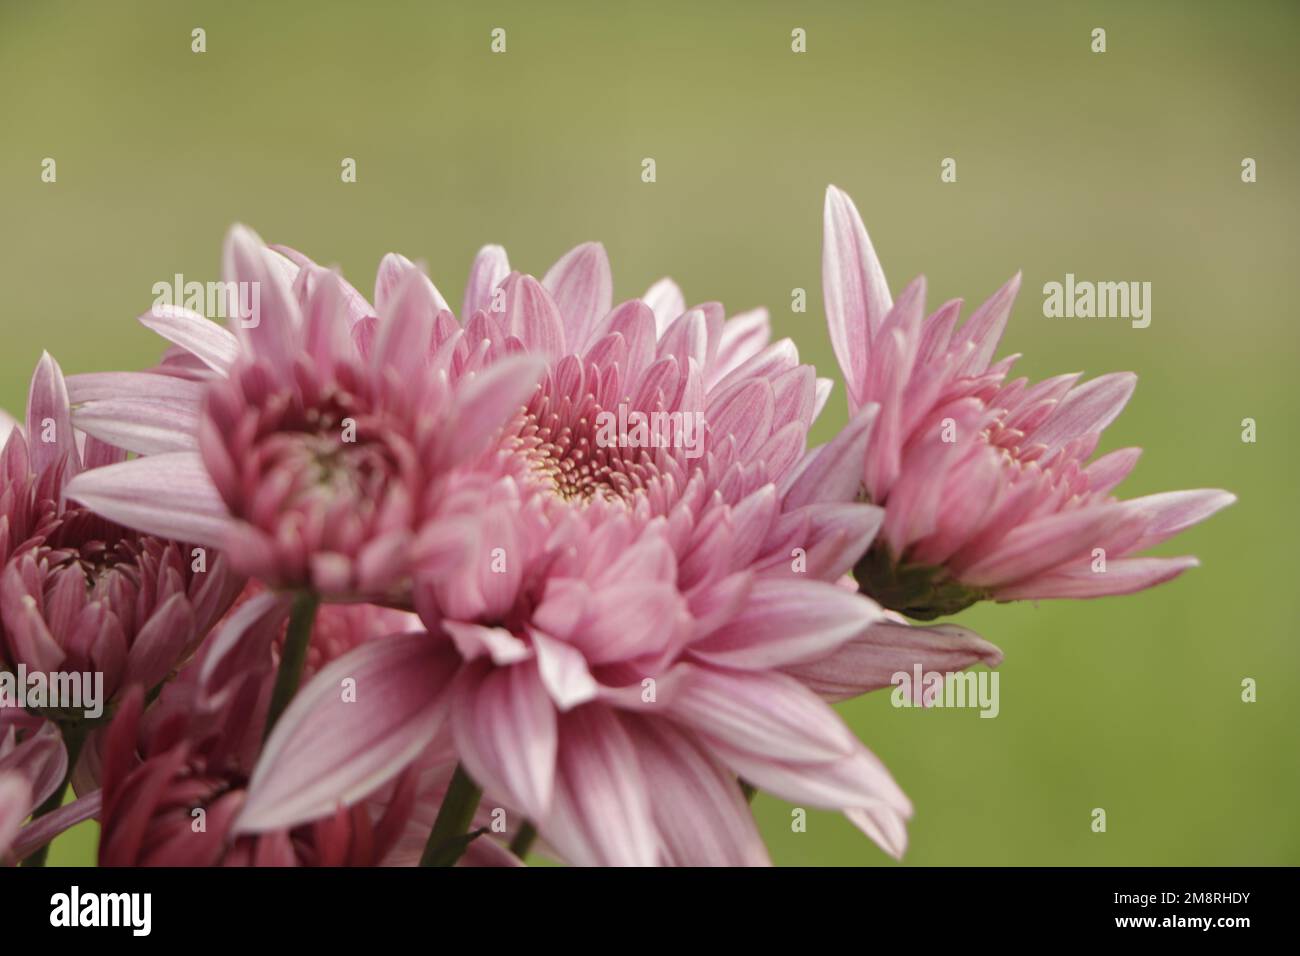 Pink chrysanthemum flowers macro image, floral vintage background Stock Photo